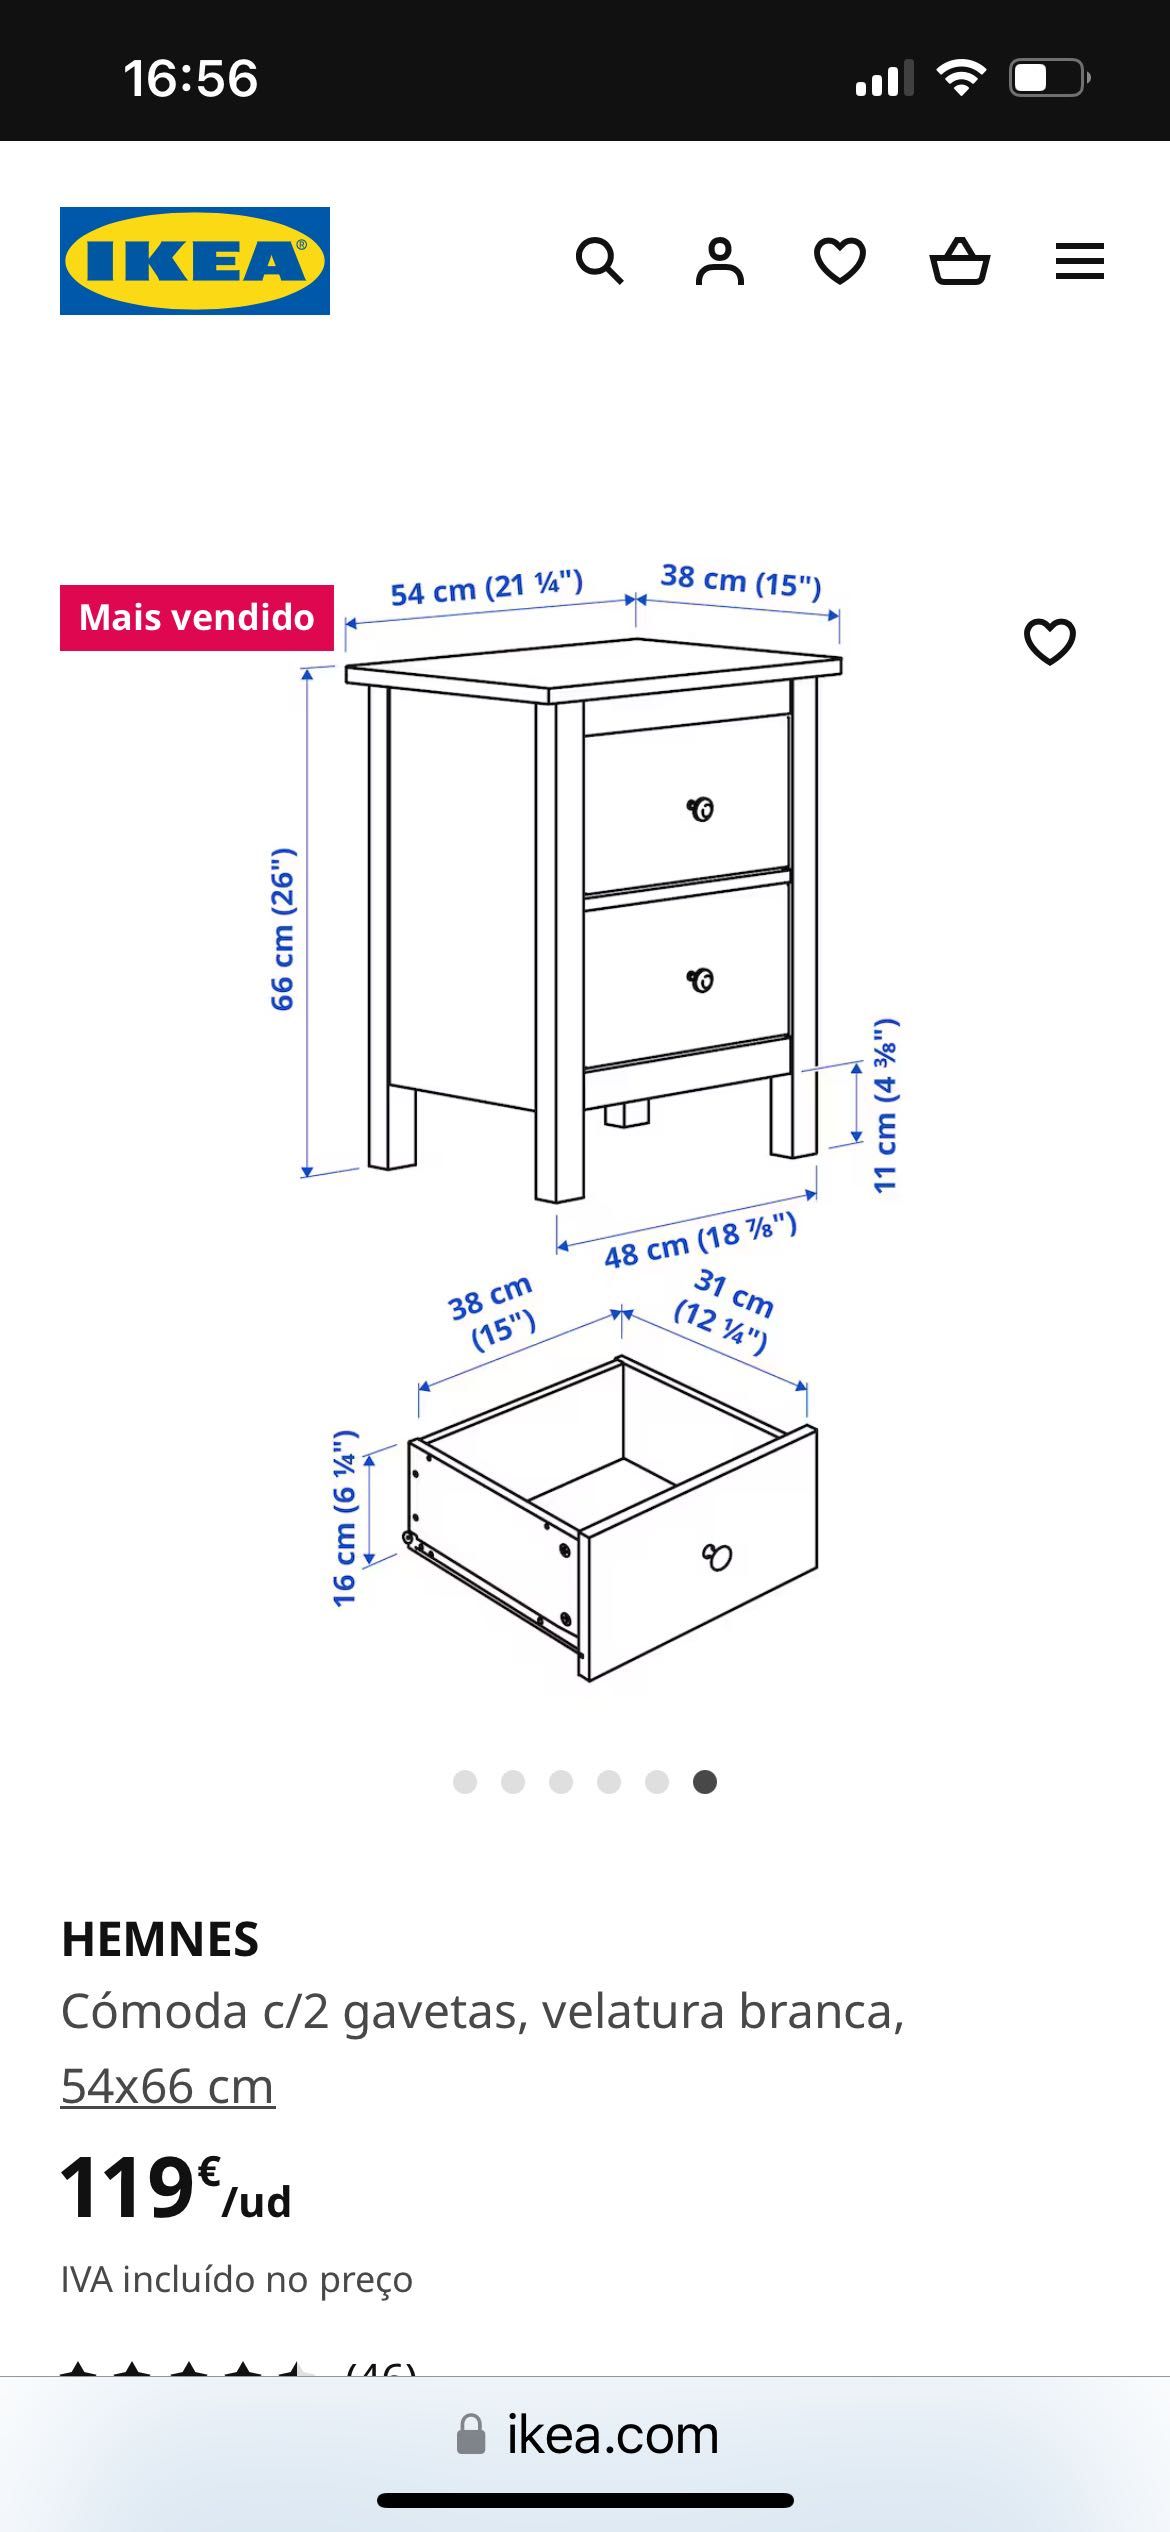 Cómoda c/2 gavetas, velatura branca, HEMNES - Ikea